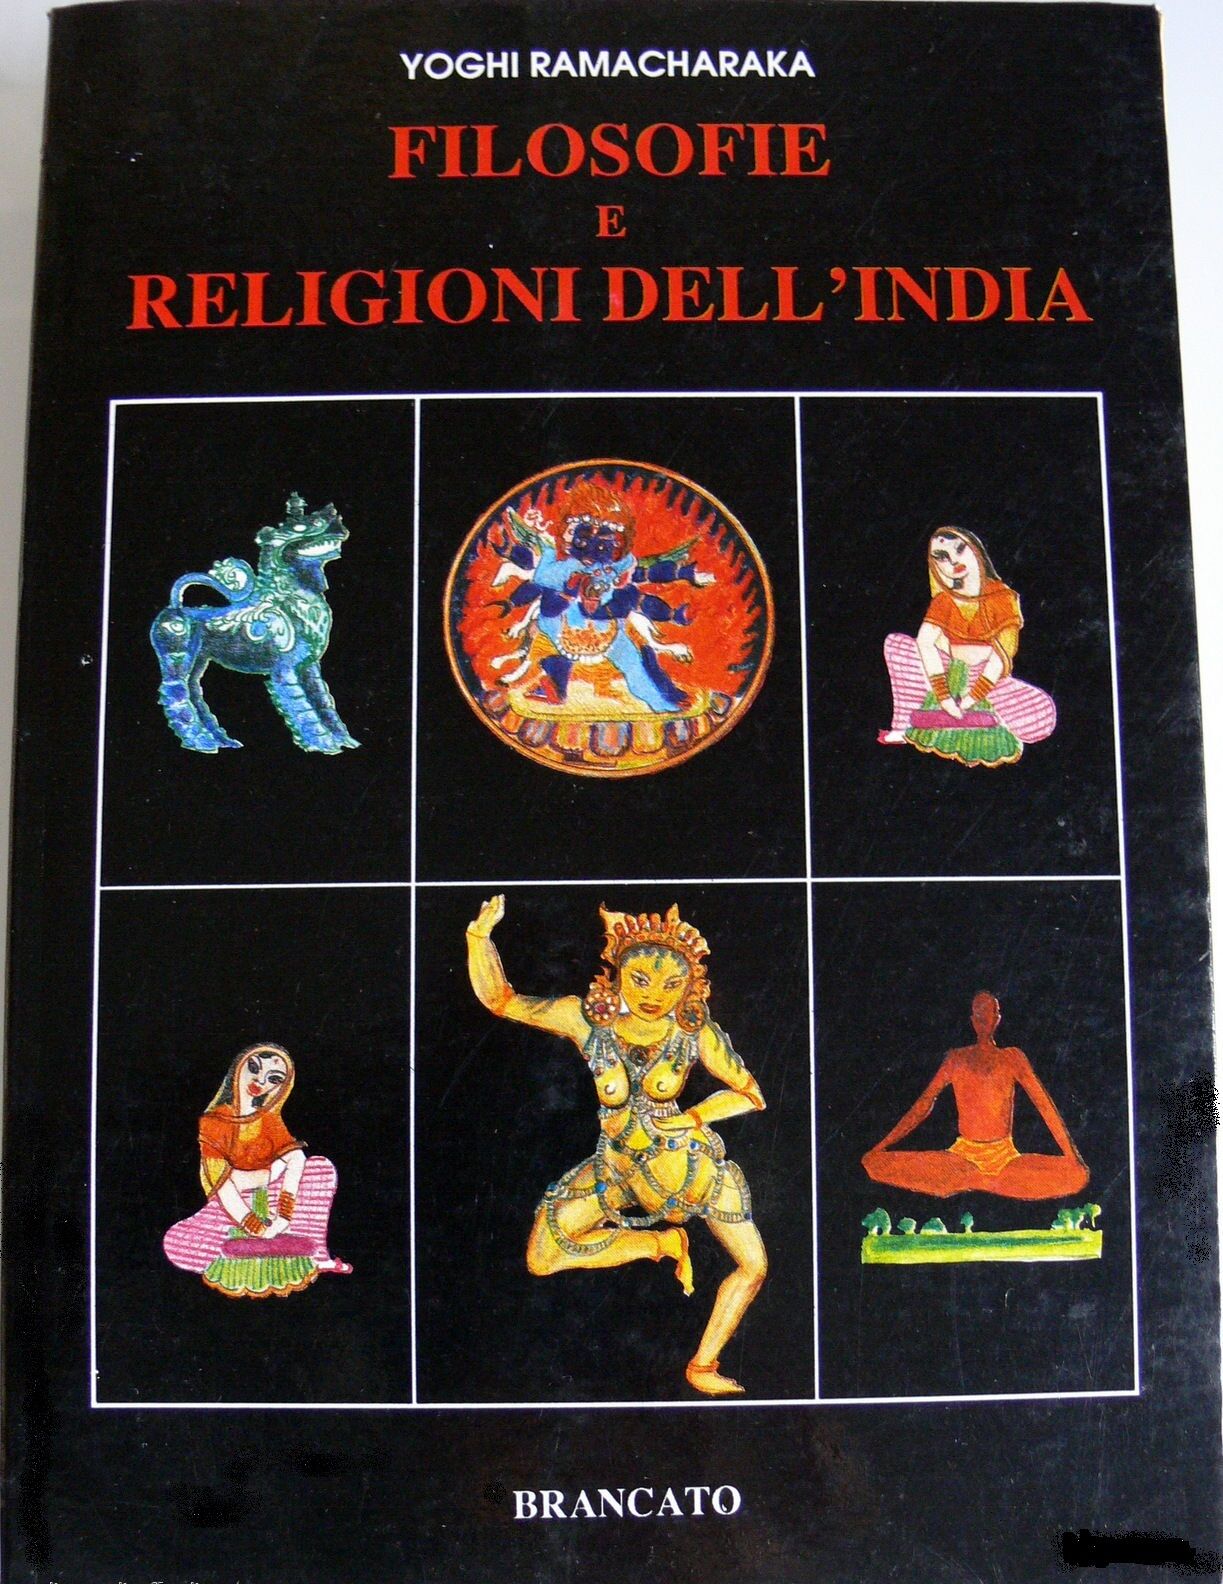 YOGHI RAMACHARAKA -FILOSOFIE E RELIGIONI DELL'INDIA - BRANCATO 1991